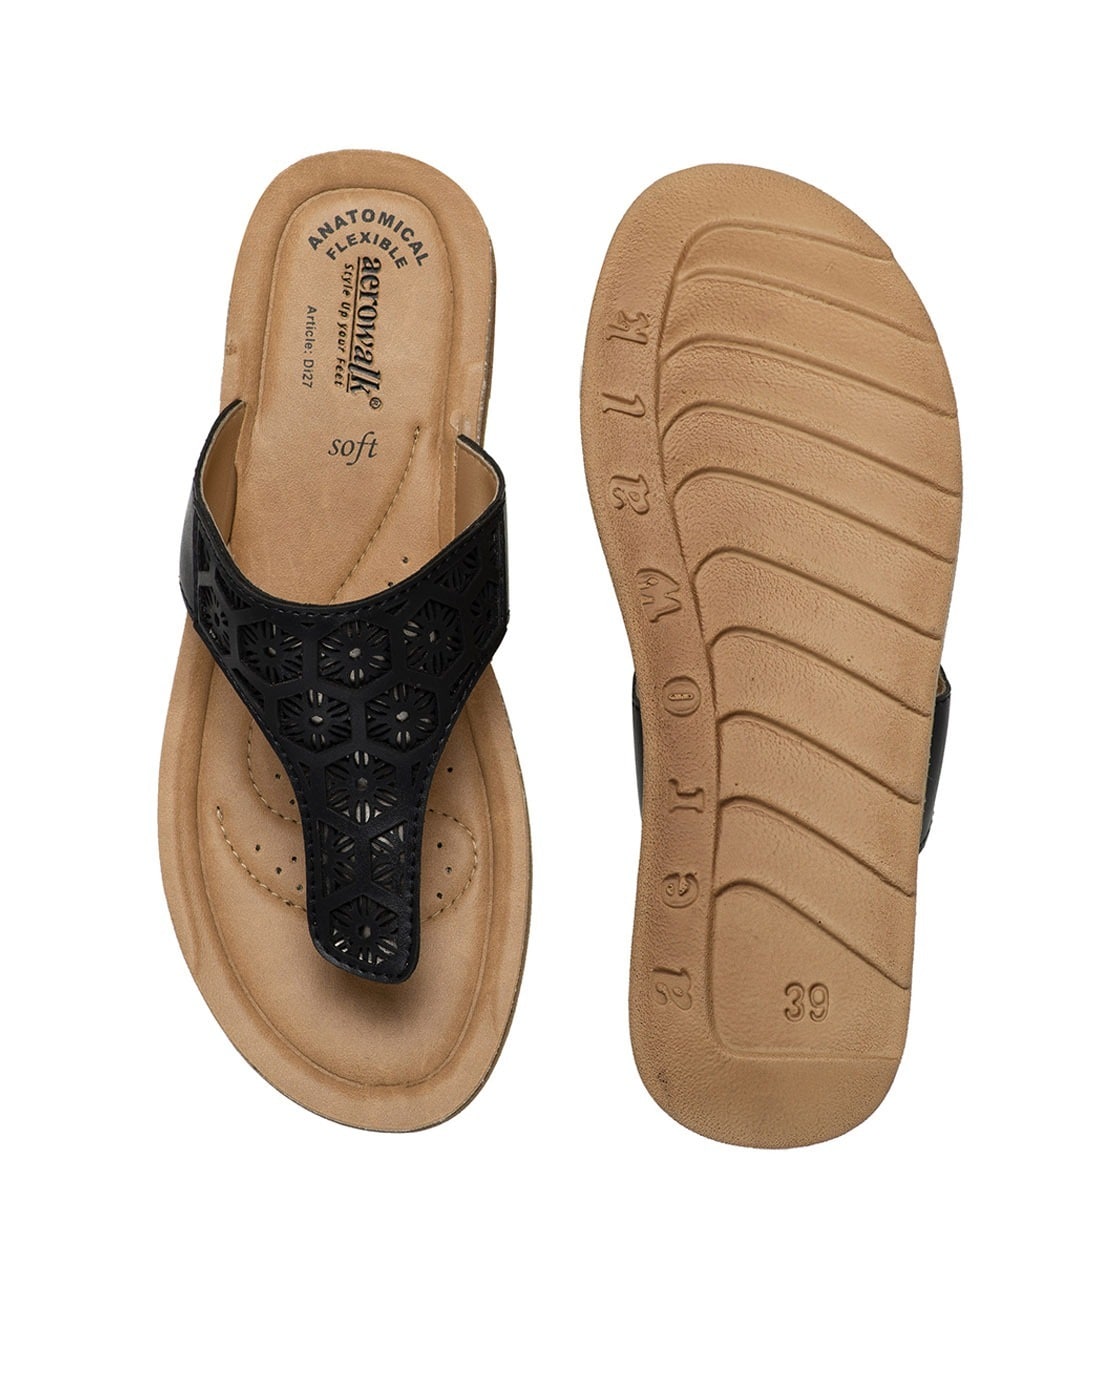 AEROWALK Stylish Fashion Sandal/Slipper for Women | Comfortable|  Lightweight | Anti Skid | Casual Office Footwear (DI82_COPPER_35) :  Amazon.in: Fashion